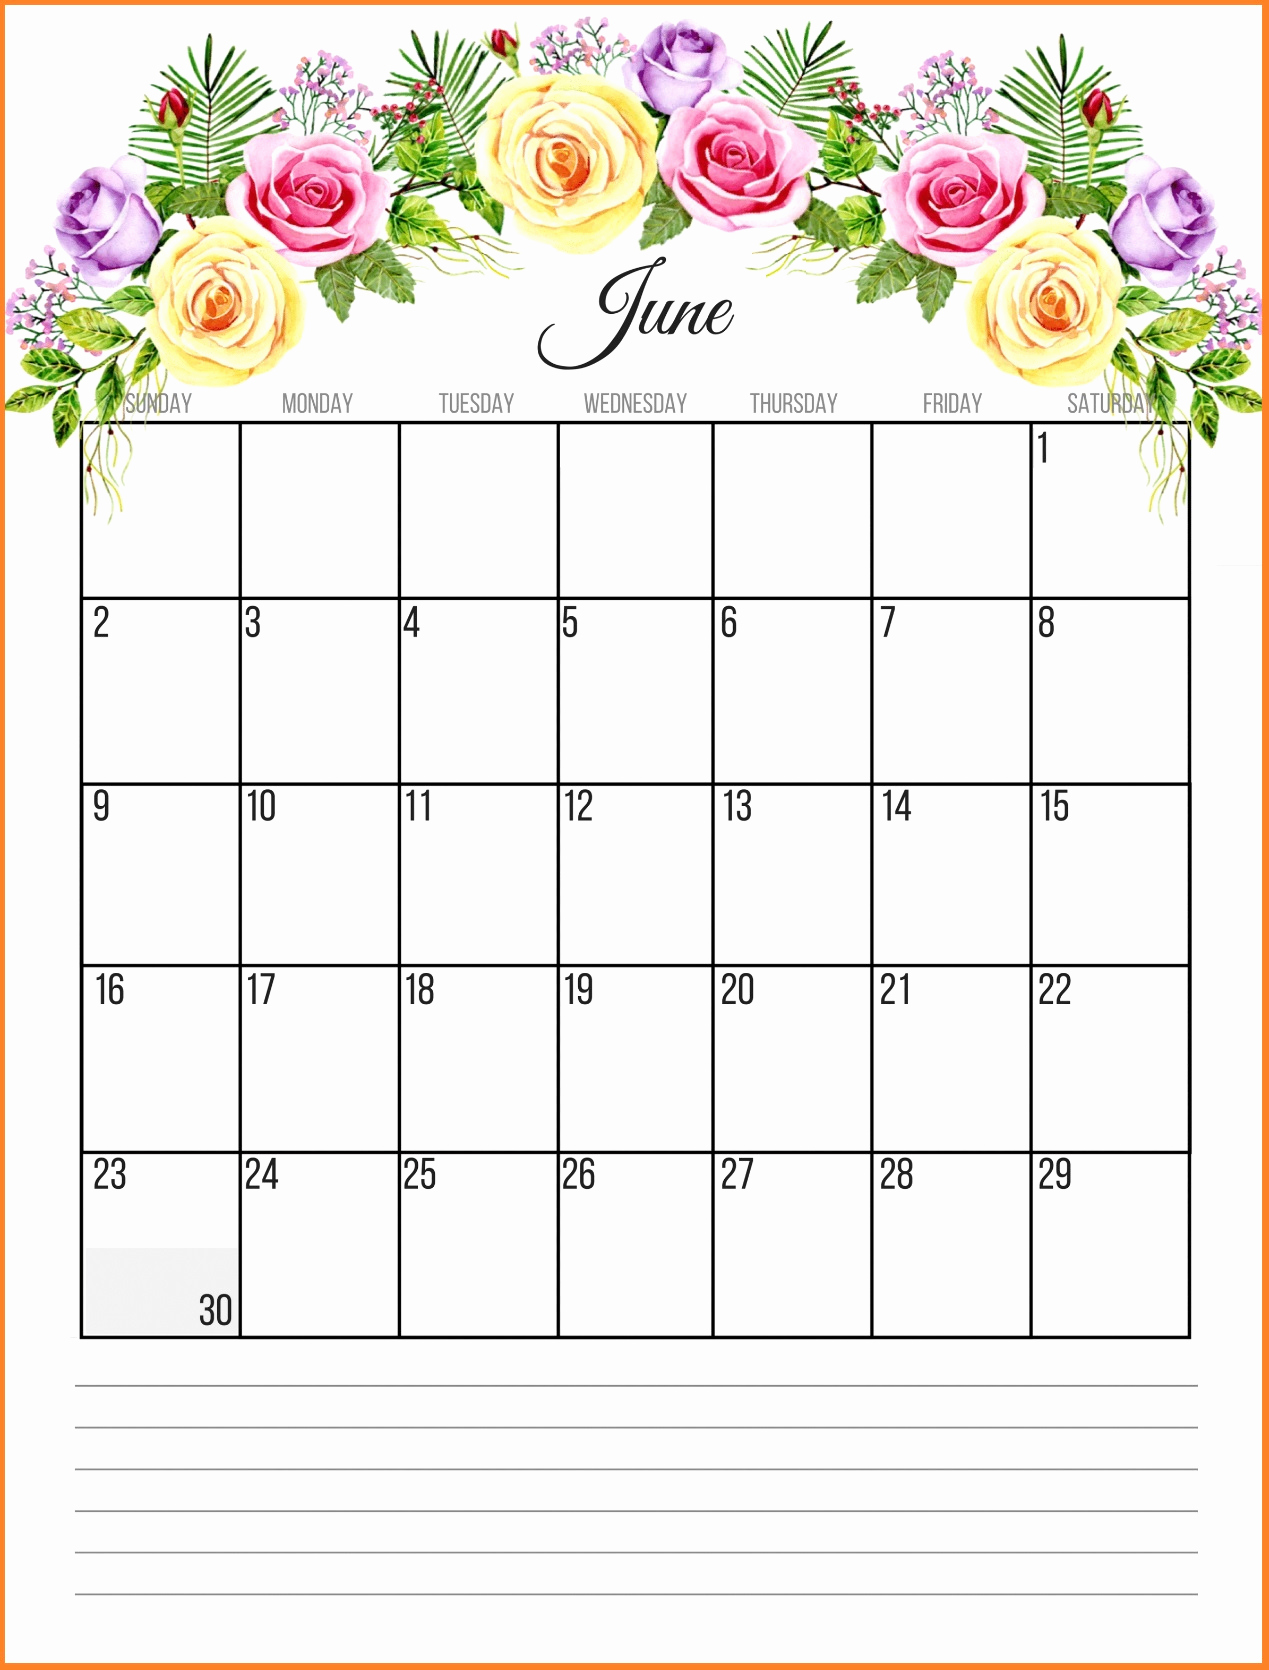 Floral Cute June 2019 Calendar